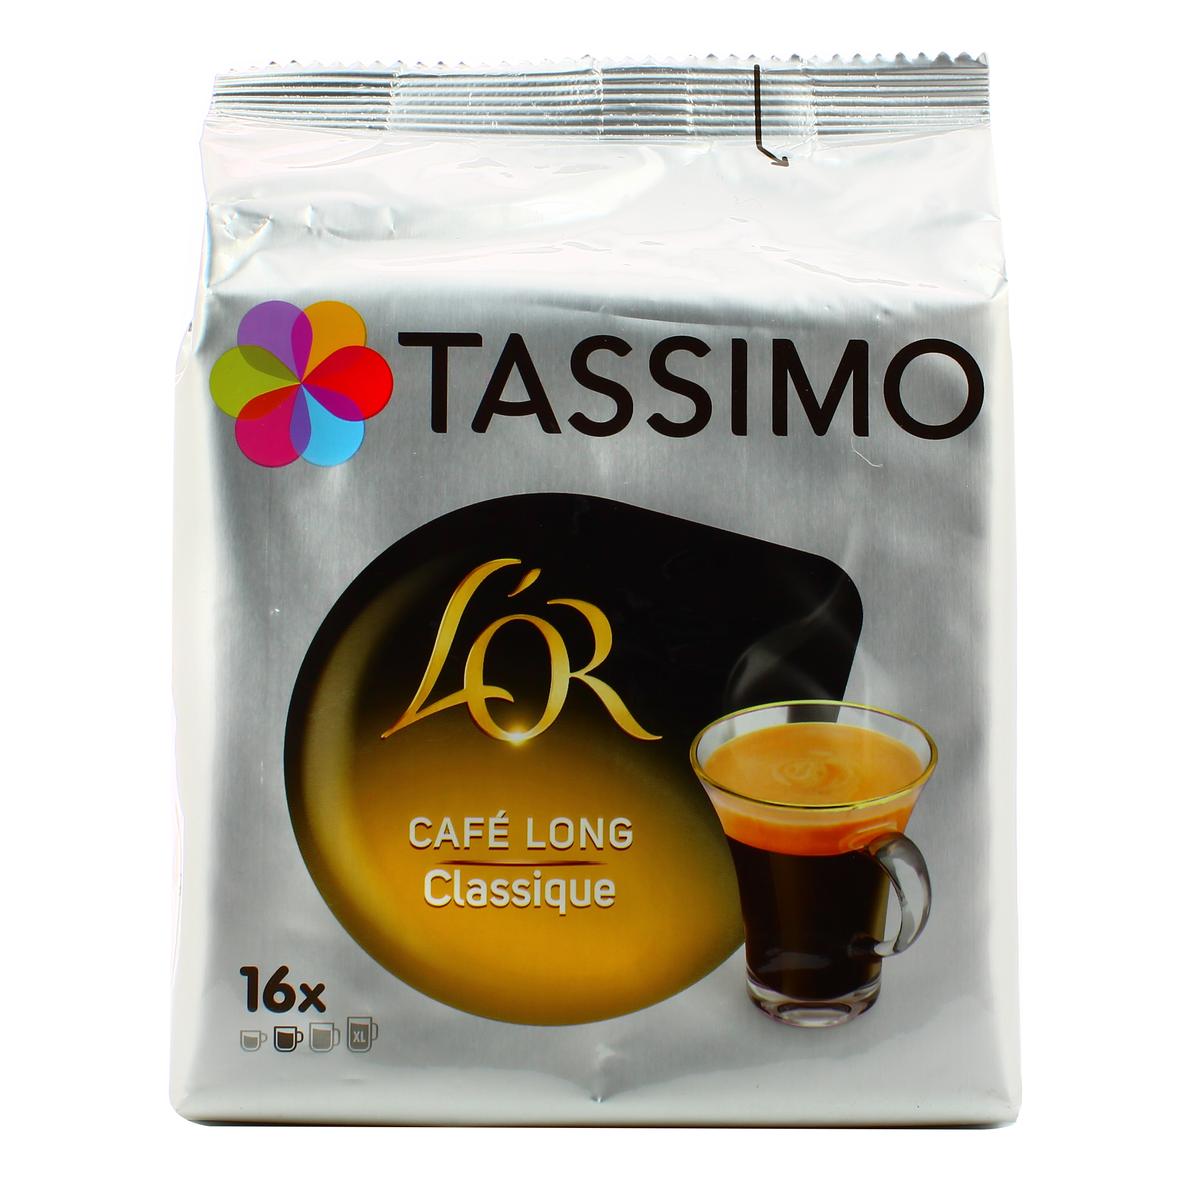  Tassimo Dosette Café - L'OR Petit Déjeuner Classic